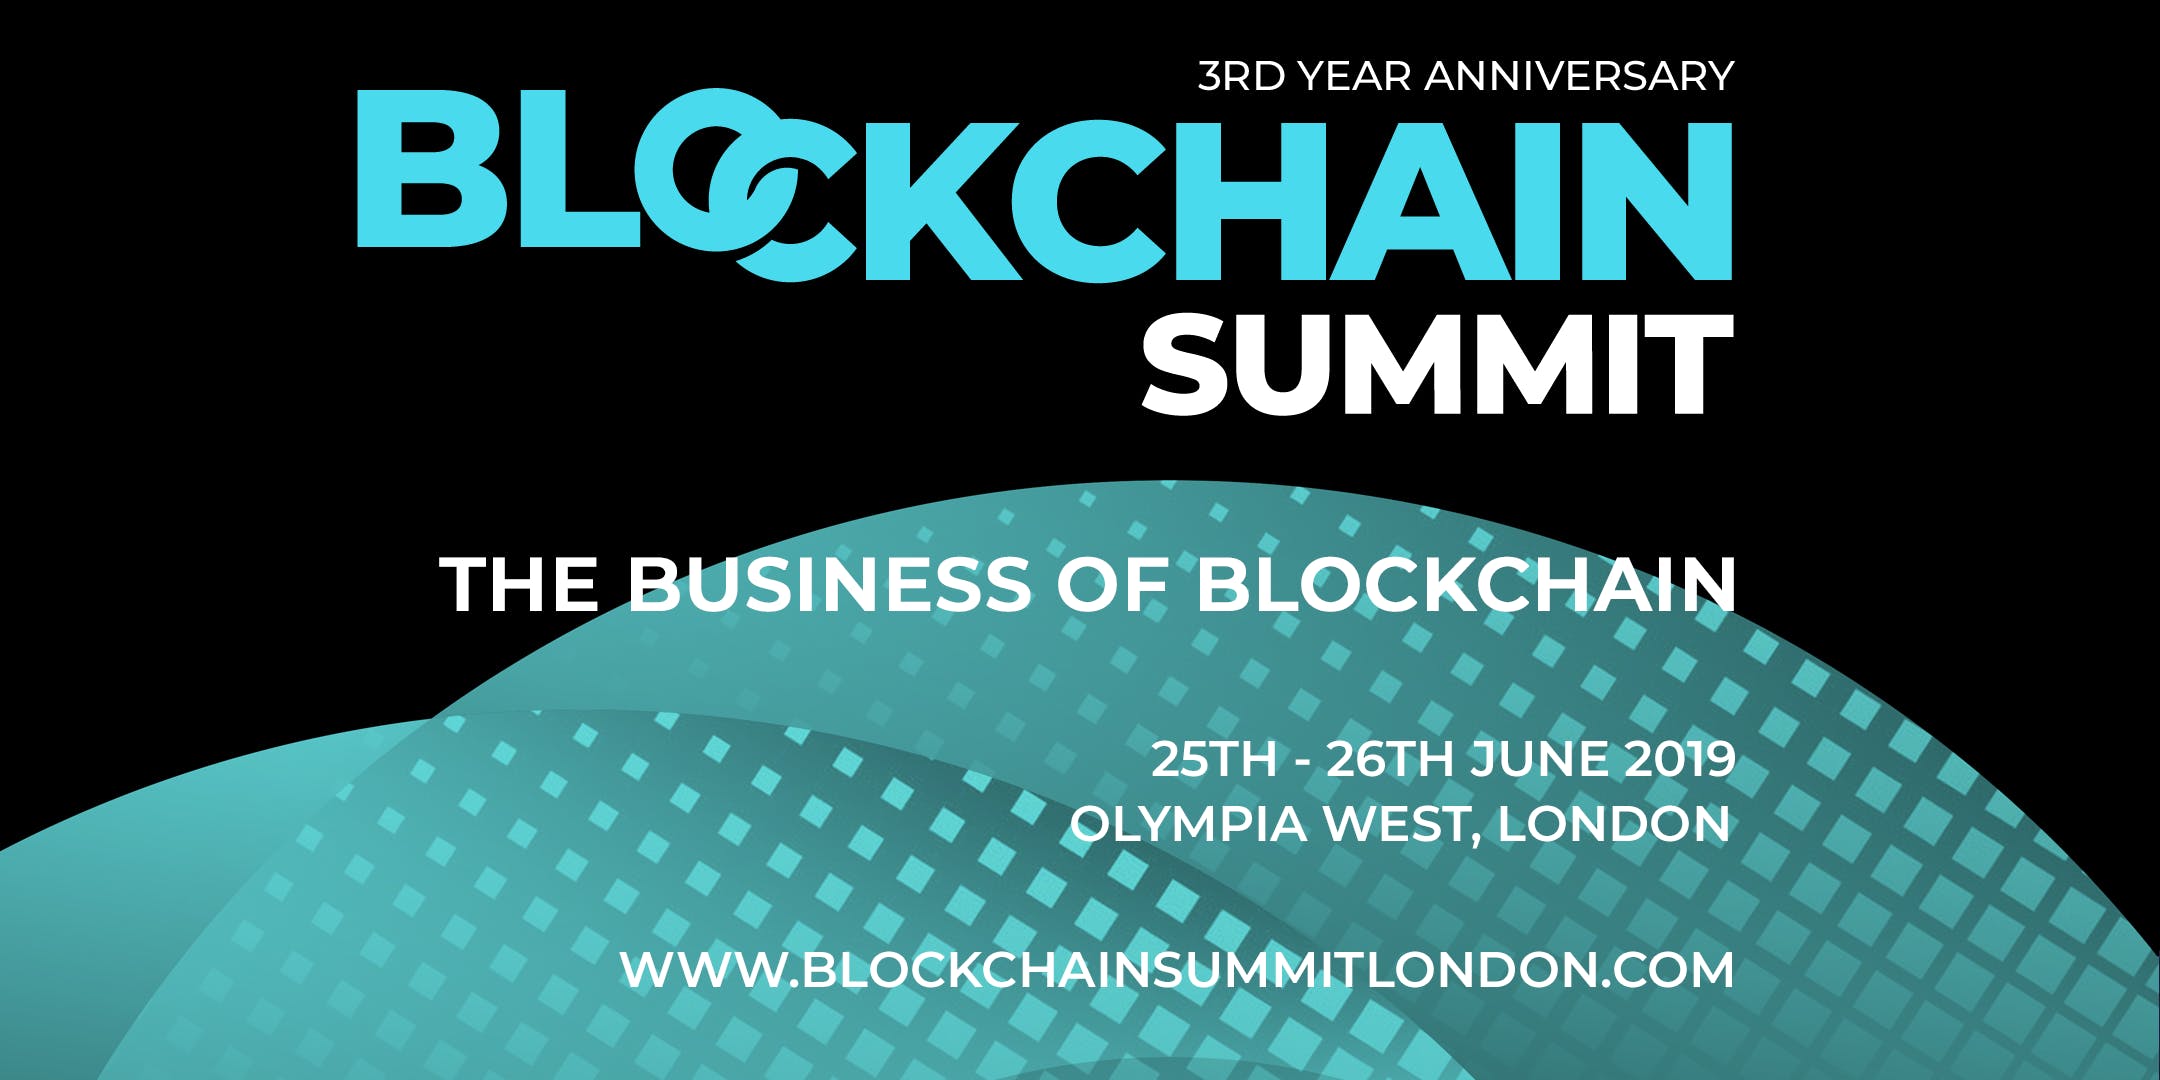 Blockchain Summit London: a new event in 2019